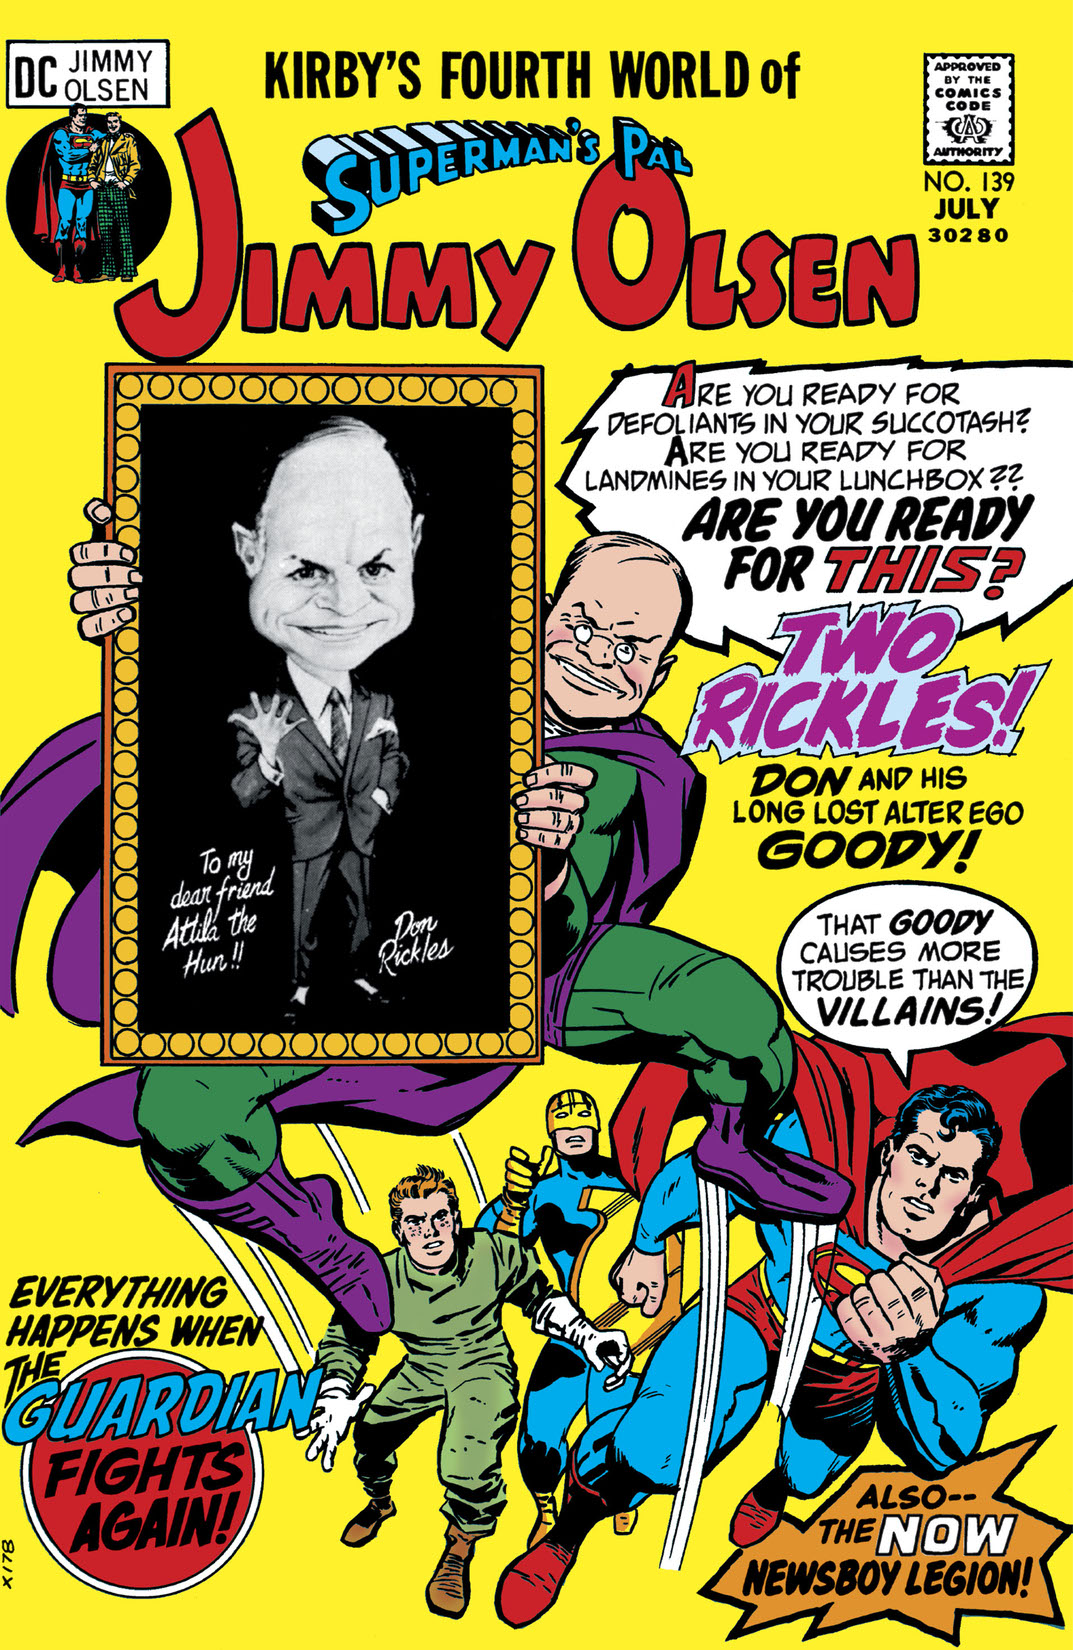 Superman's Pal, Jimmy Olsen #139 preview images